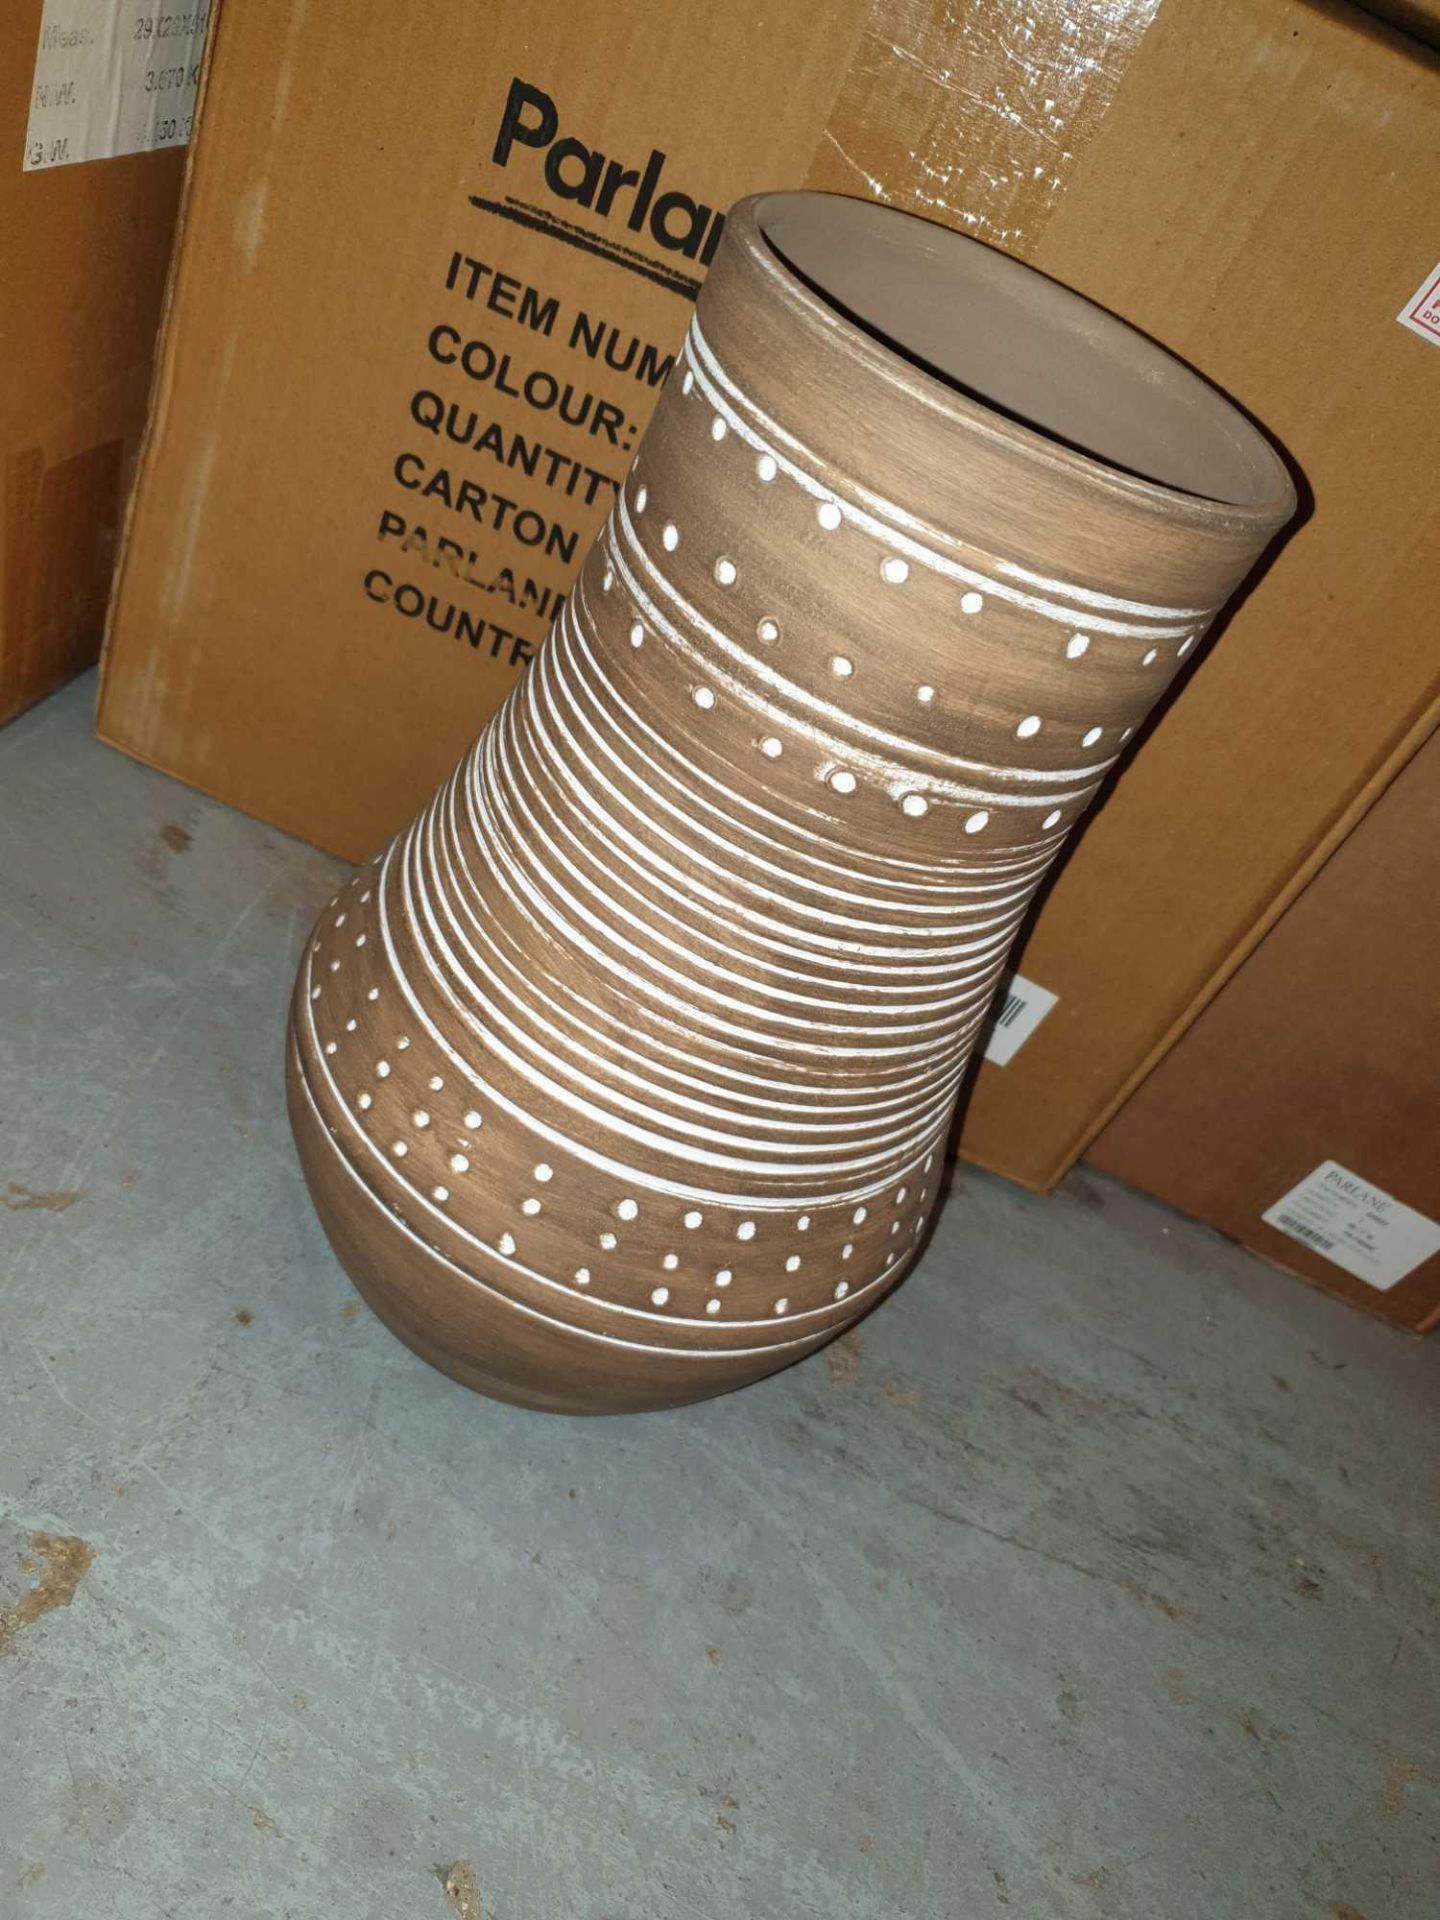 Clanfield Vase - Image 2 of 2